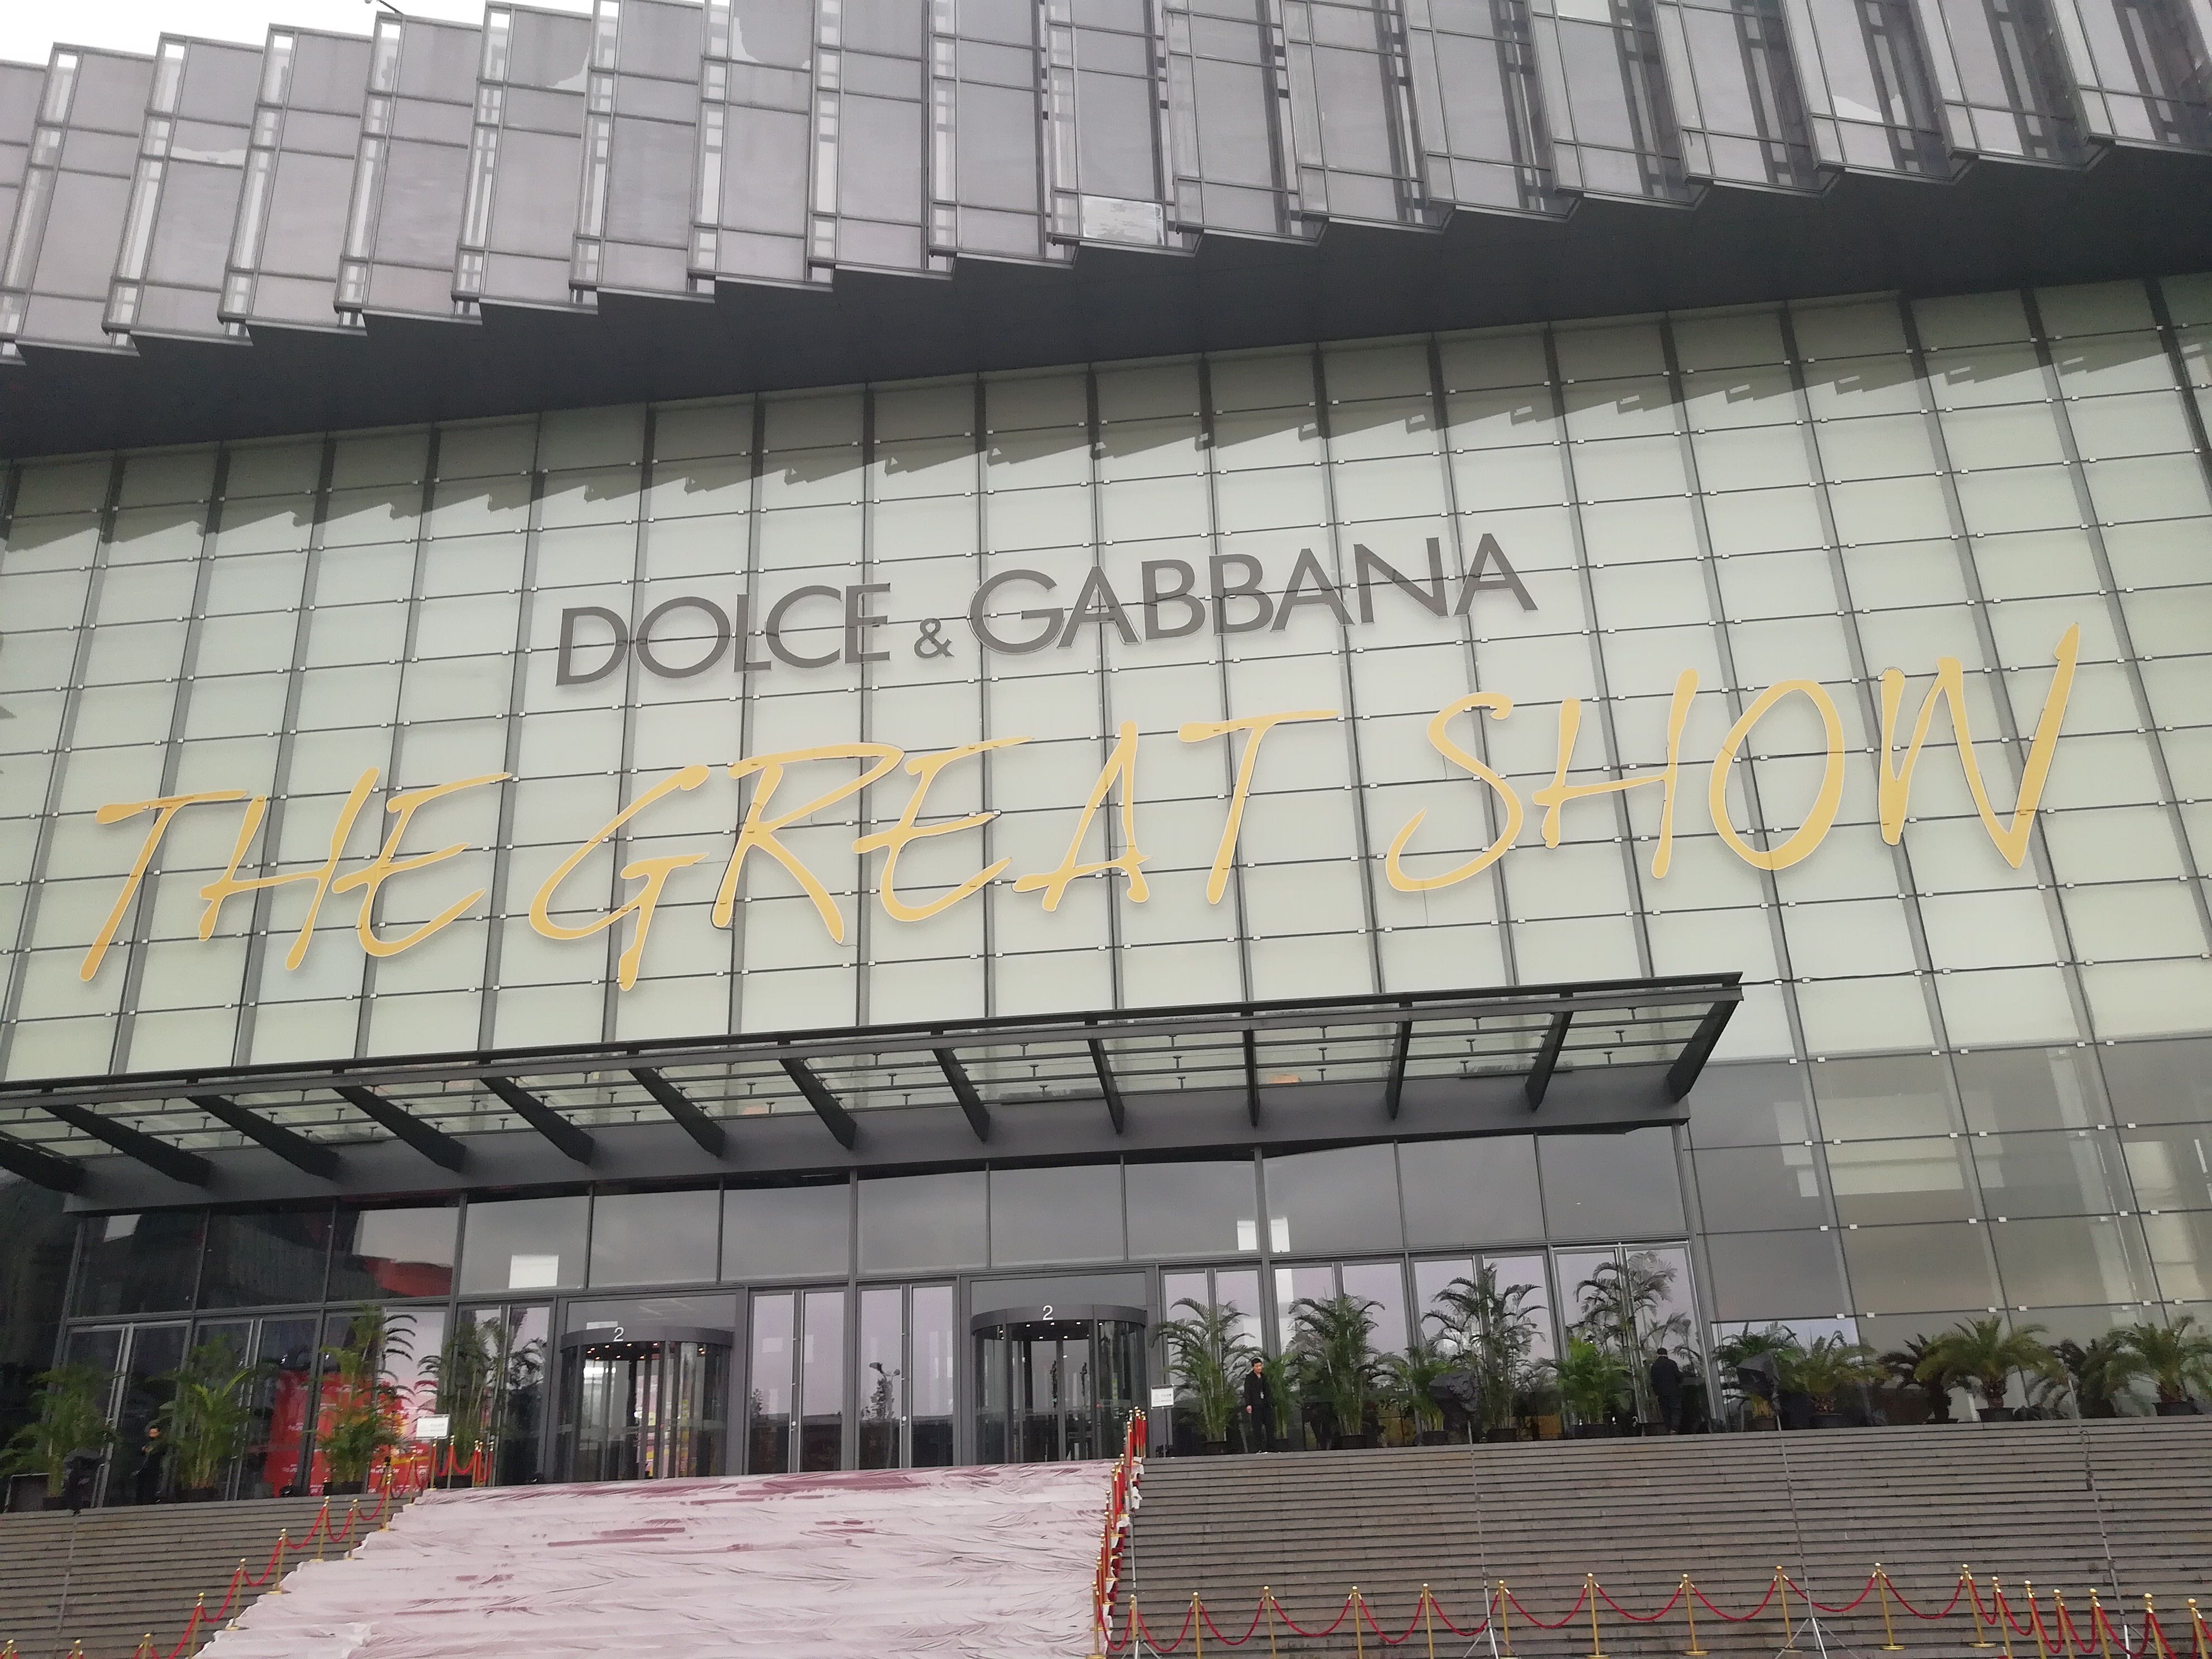 Dolce & Gabbana Great Show Cancelled In Shanghai